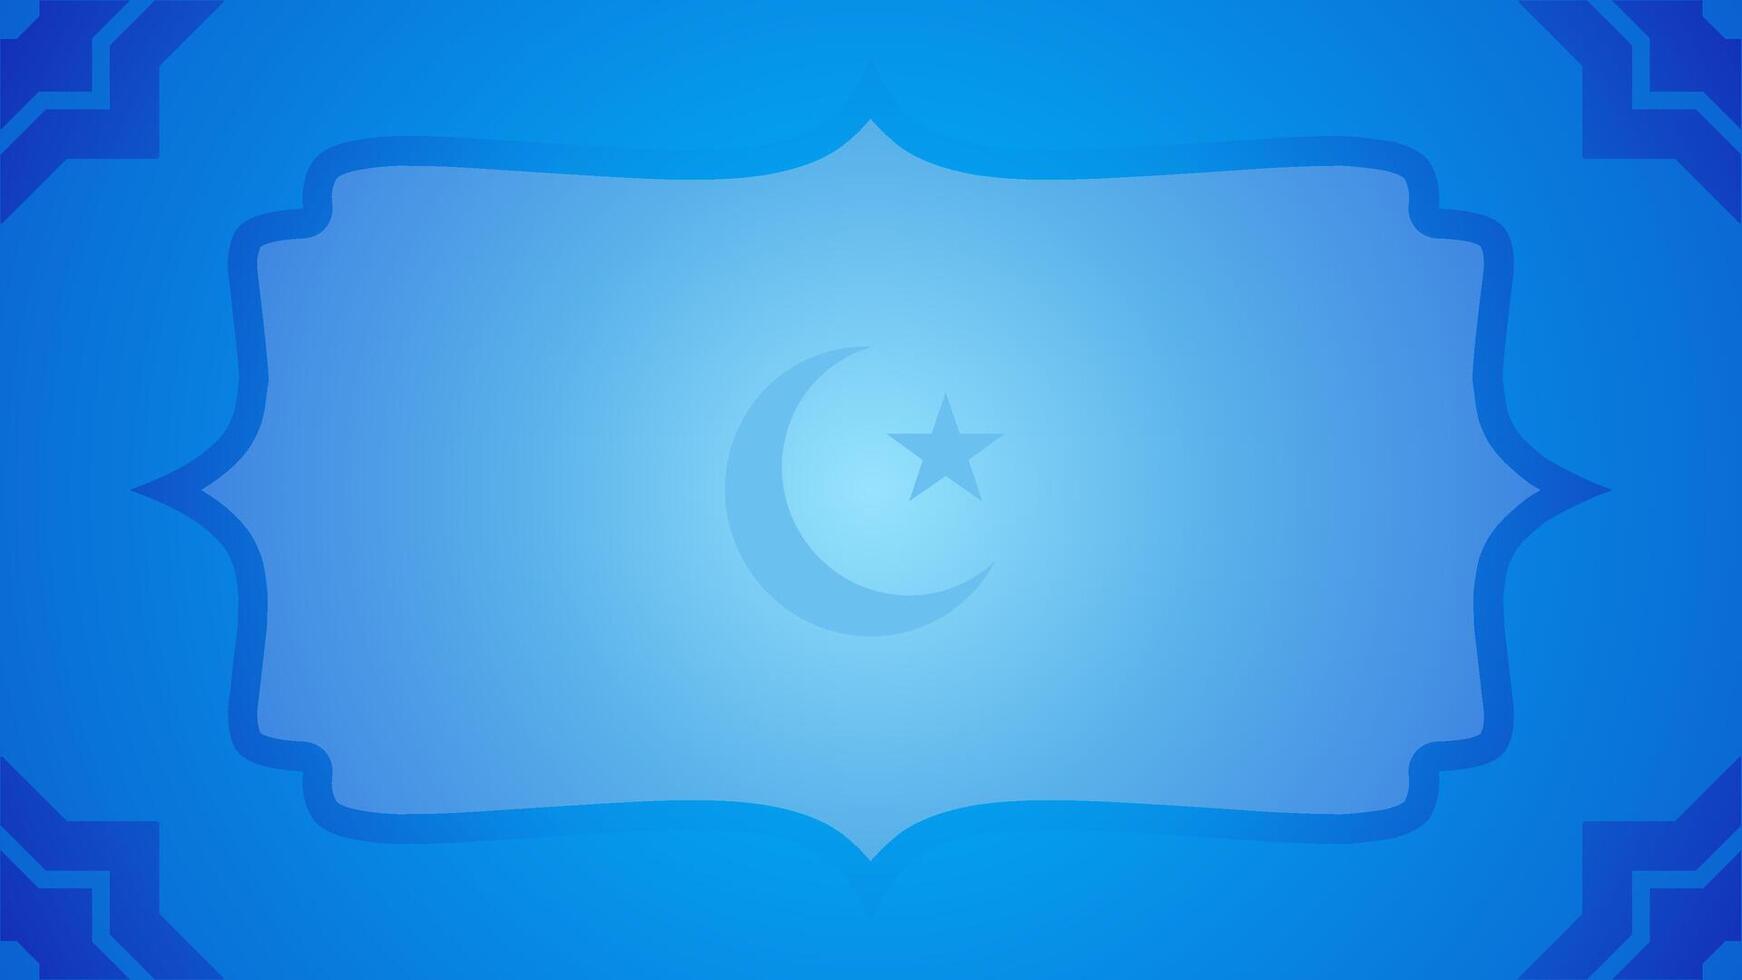 Ramadan Veranstaltung Vektor Hintergrund. Islam Hintergrund zum Ramadan Feier oder islamisch Fall. islamisch Hintergrund zum Ramadan, eid, Mubarak und Muslim Kultur